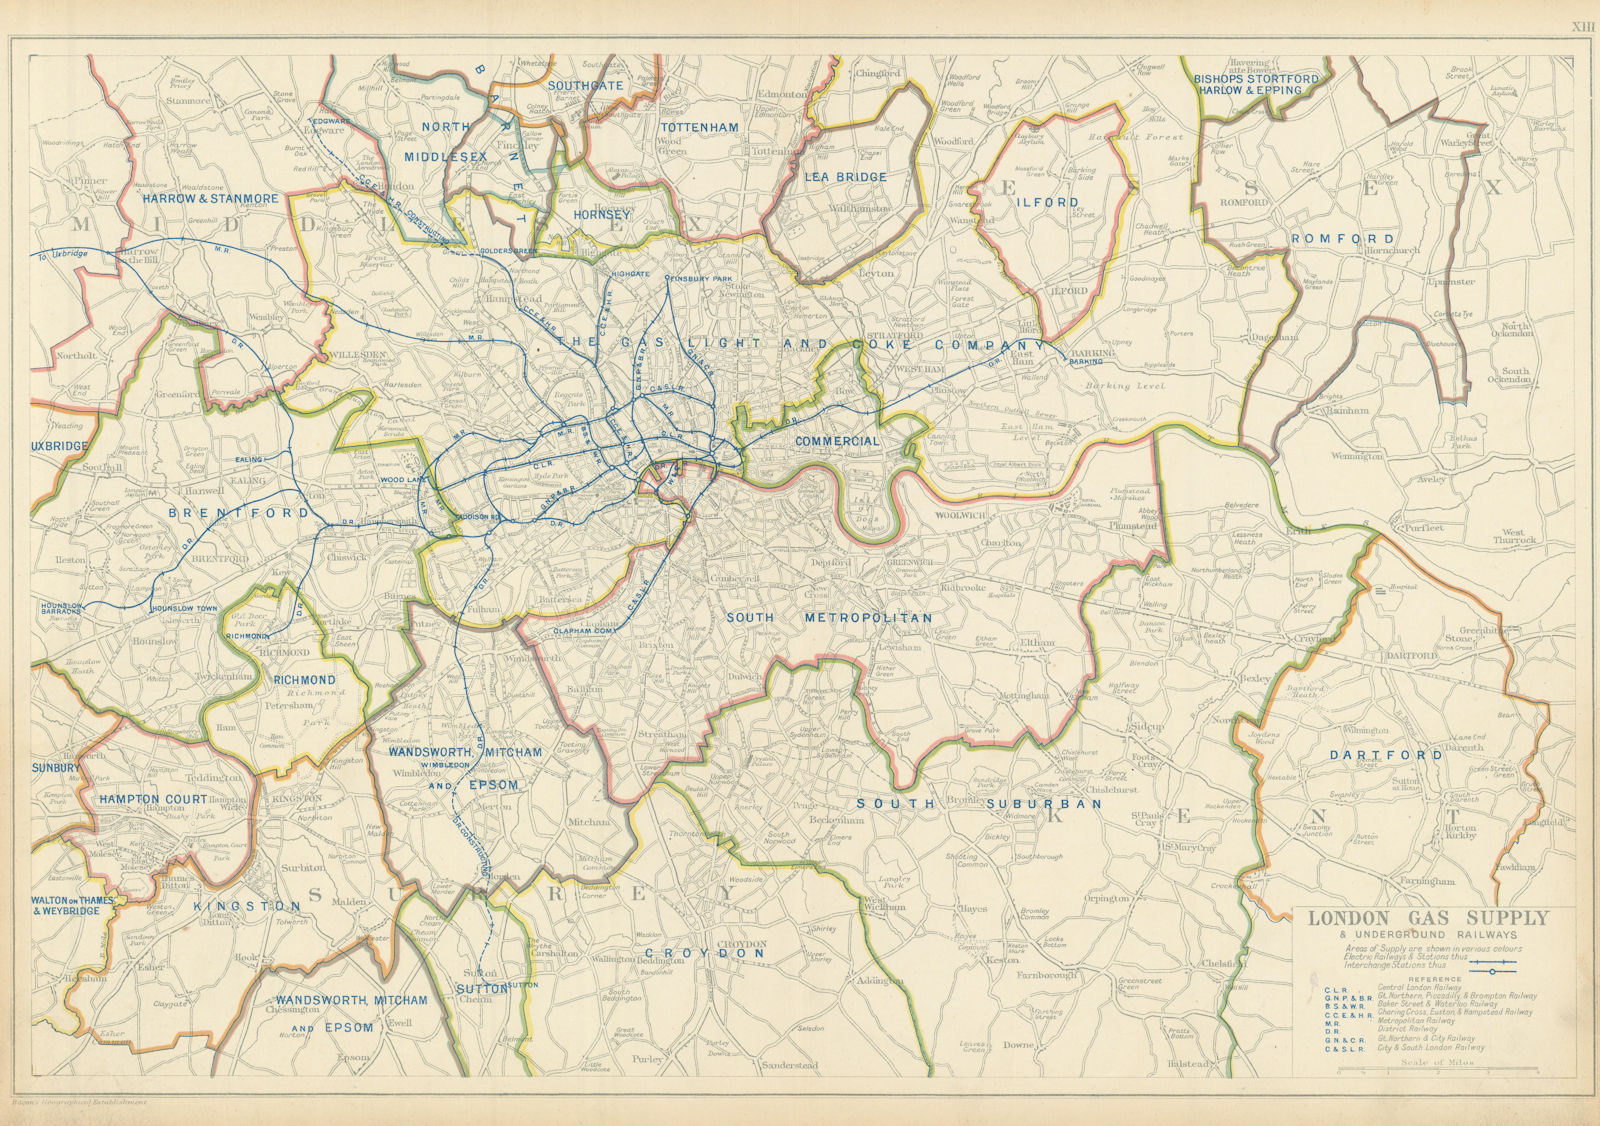 LONDON GAS SUPPLY areas + UNDERGROUND/Tube & electrified railways.BACON 1913 map